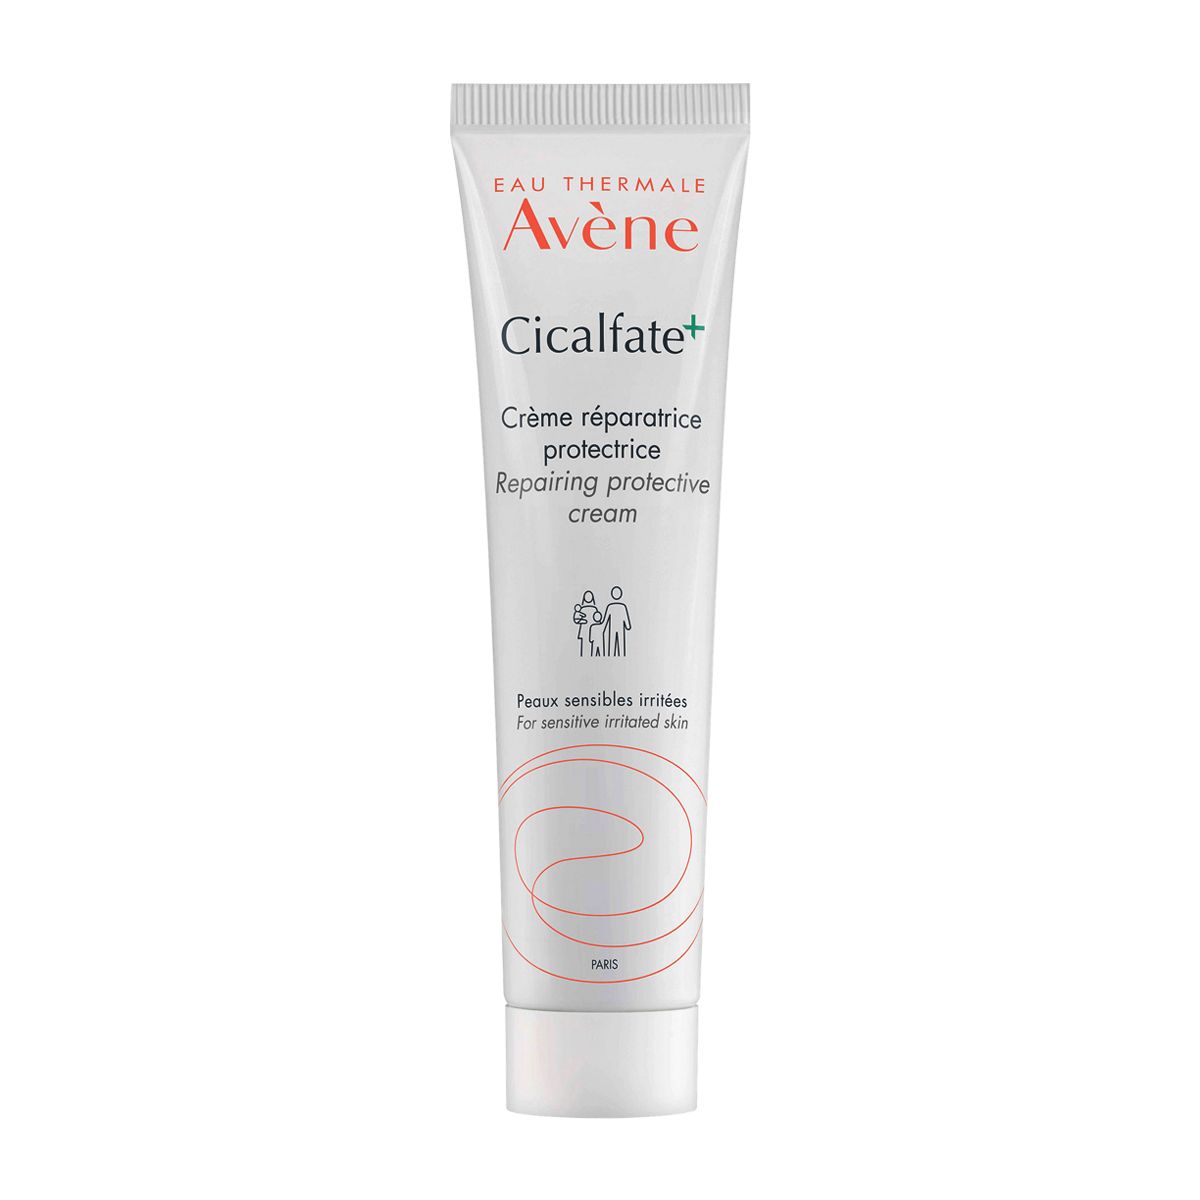 Avene Cicalfate Plus Cream For Skin Healing